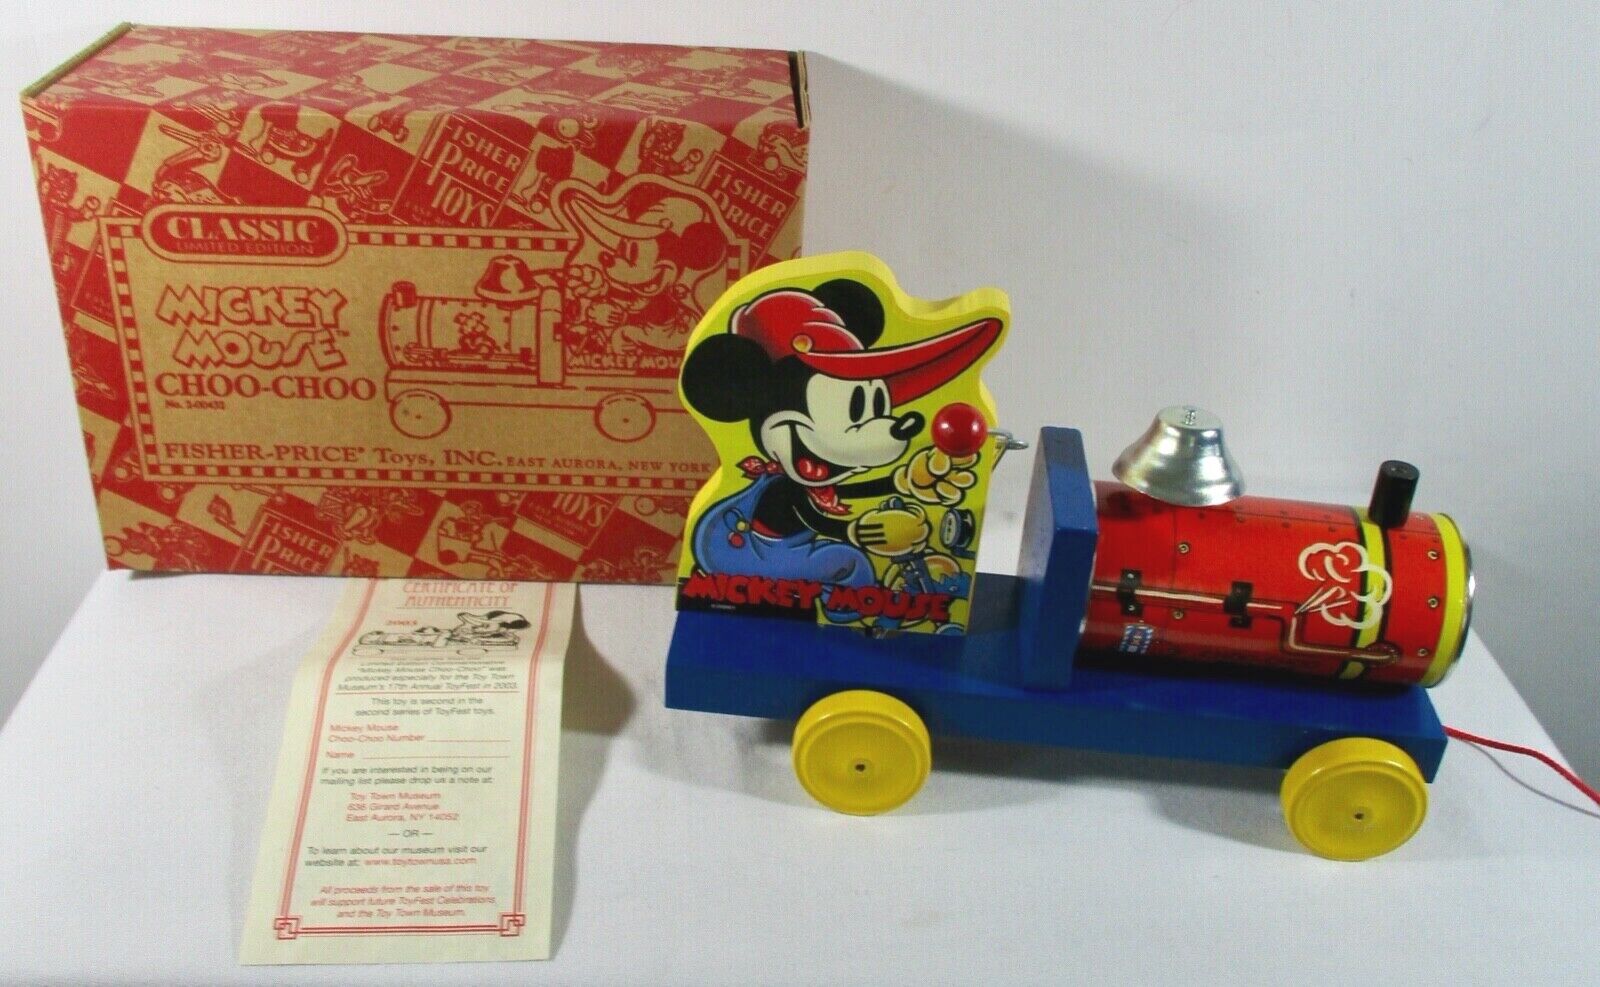 Fisher Price Classic Mickey Mouse Choo-choo Pull Toy W/ Box + Coa